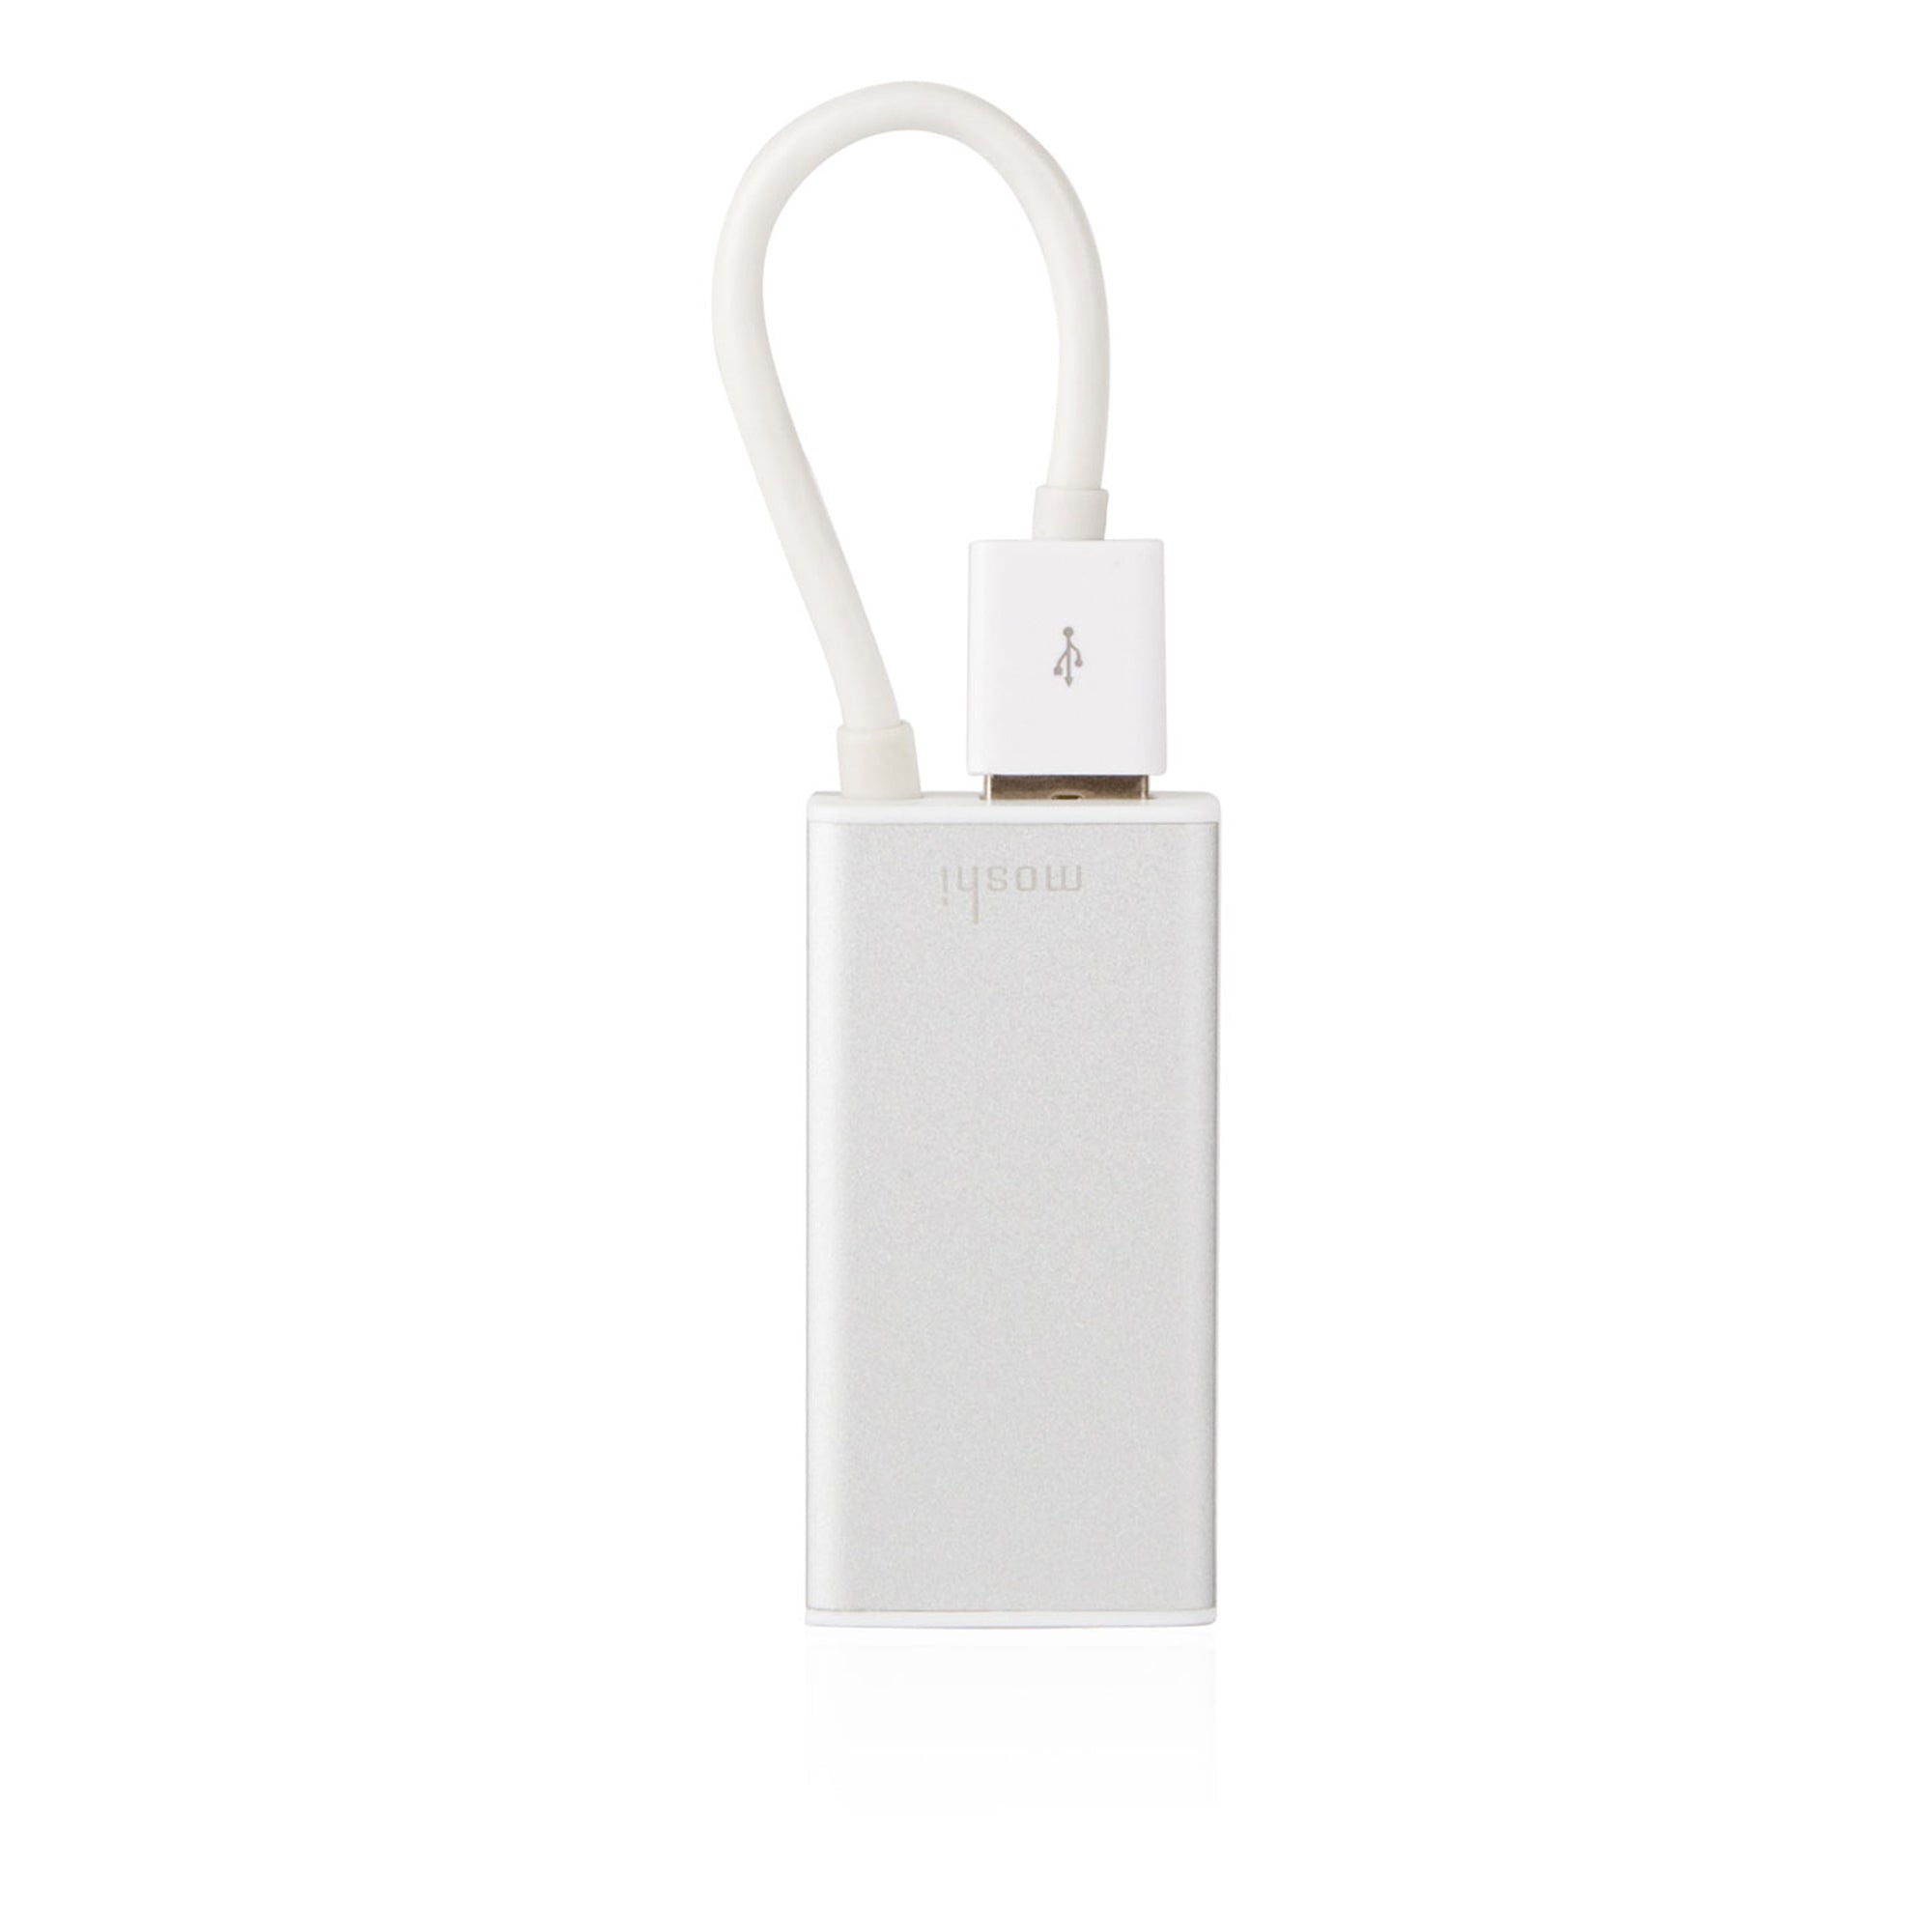 Moshi USB to Ethernet Adapter